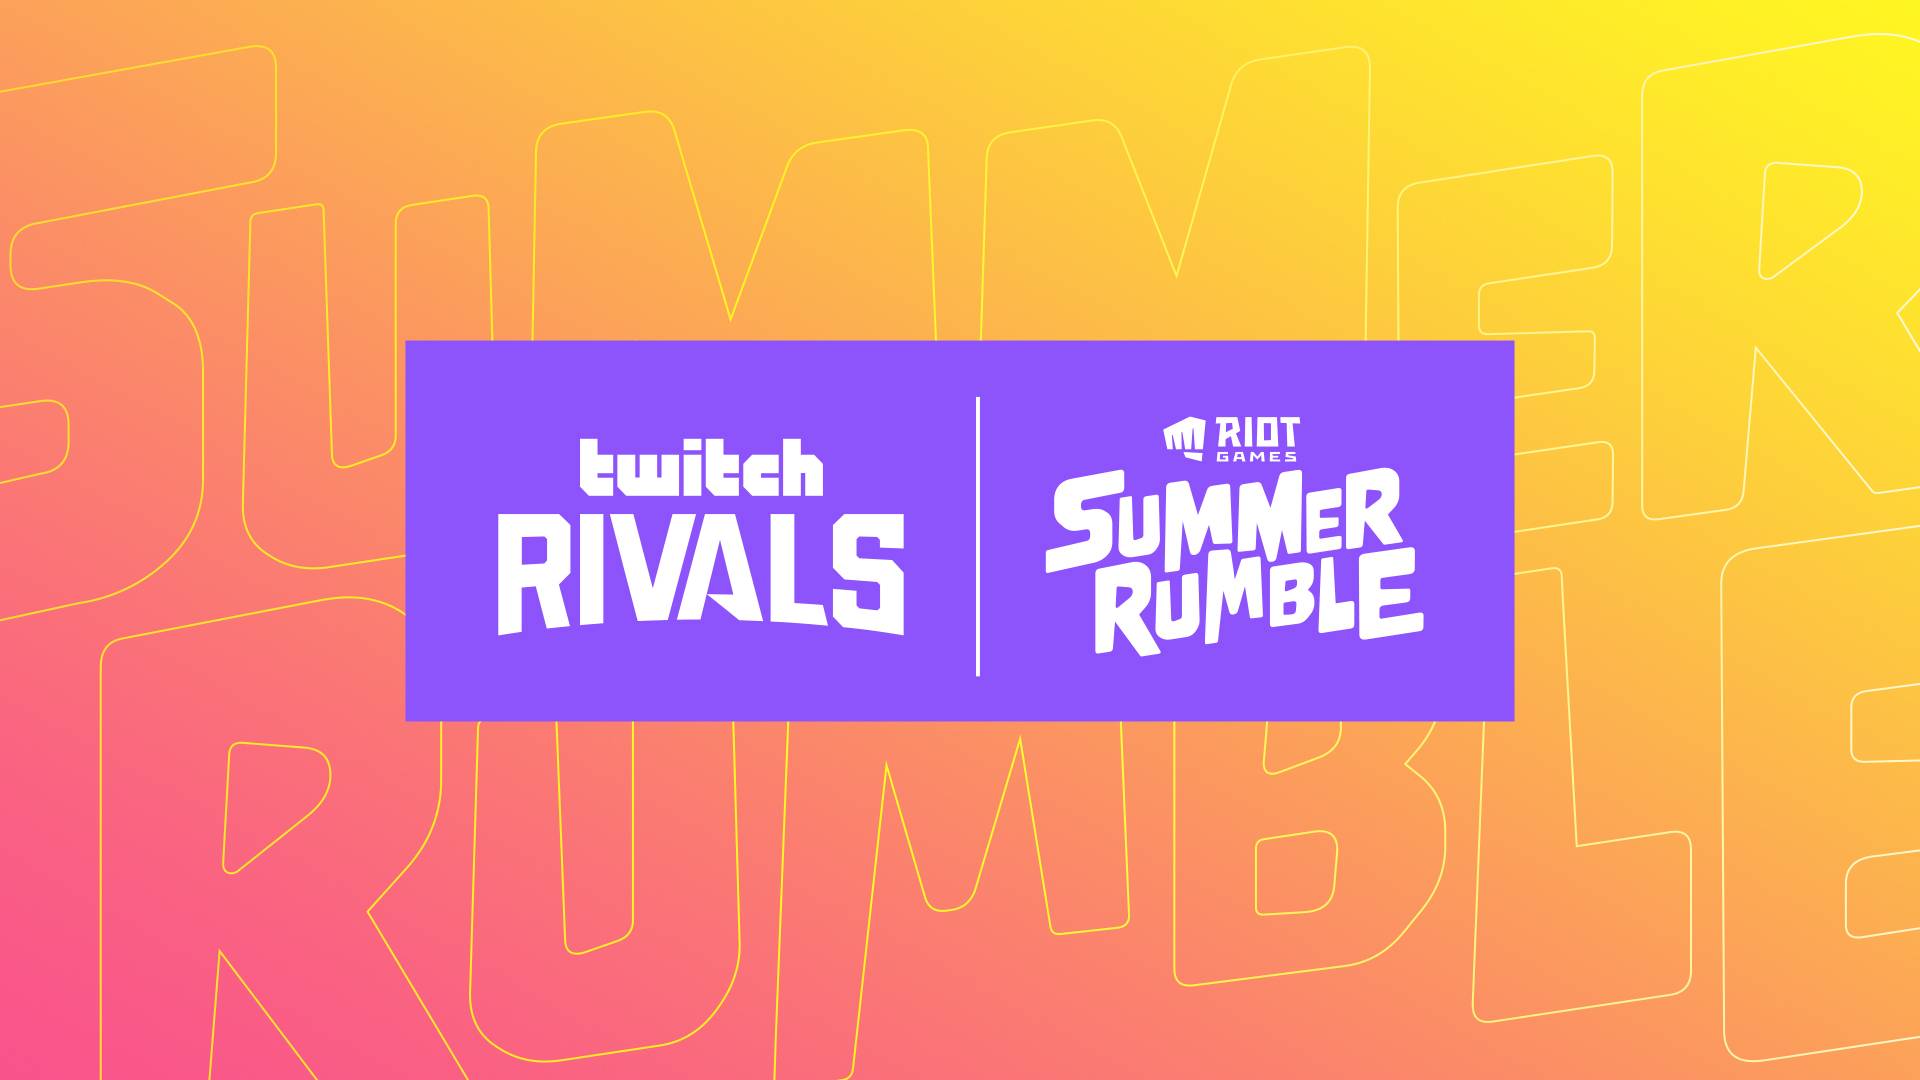 Riot Games Summer Rumble Etkinliği Başlıyor!